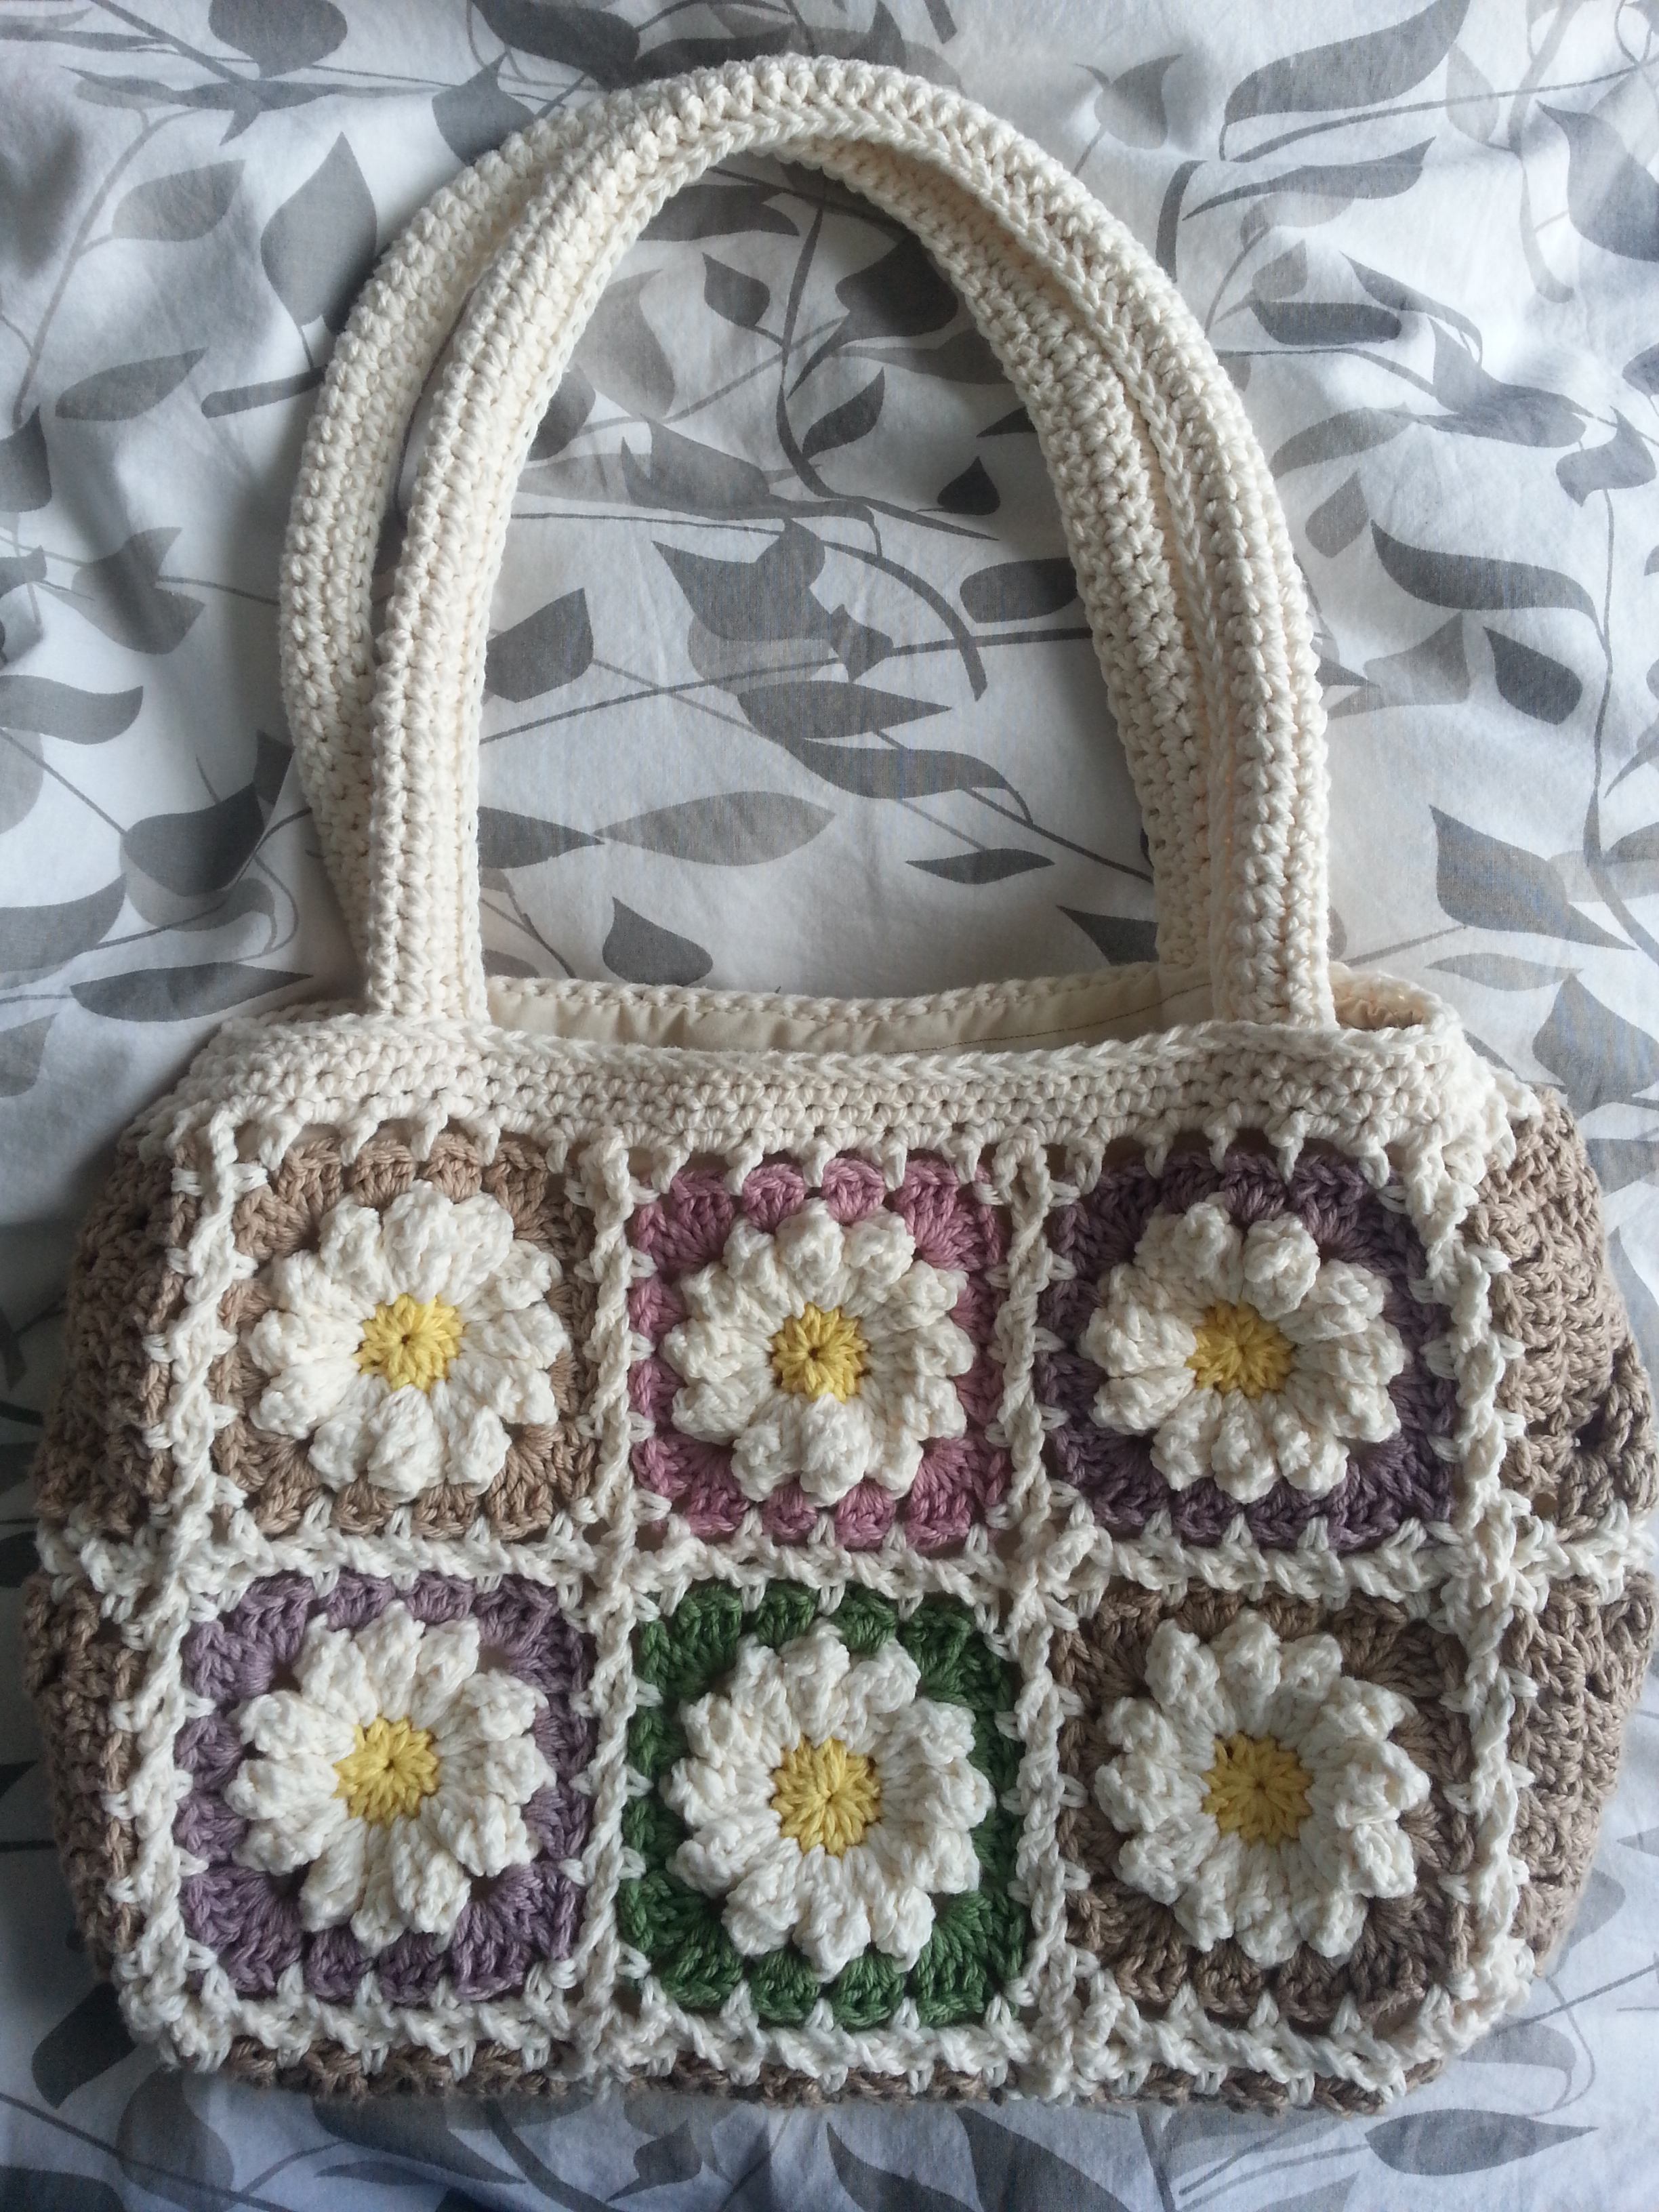 Flower Tote Bag Free Crochet Pattern - Your Crochet